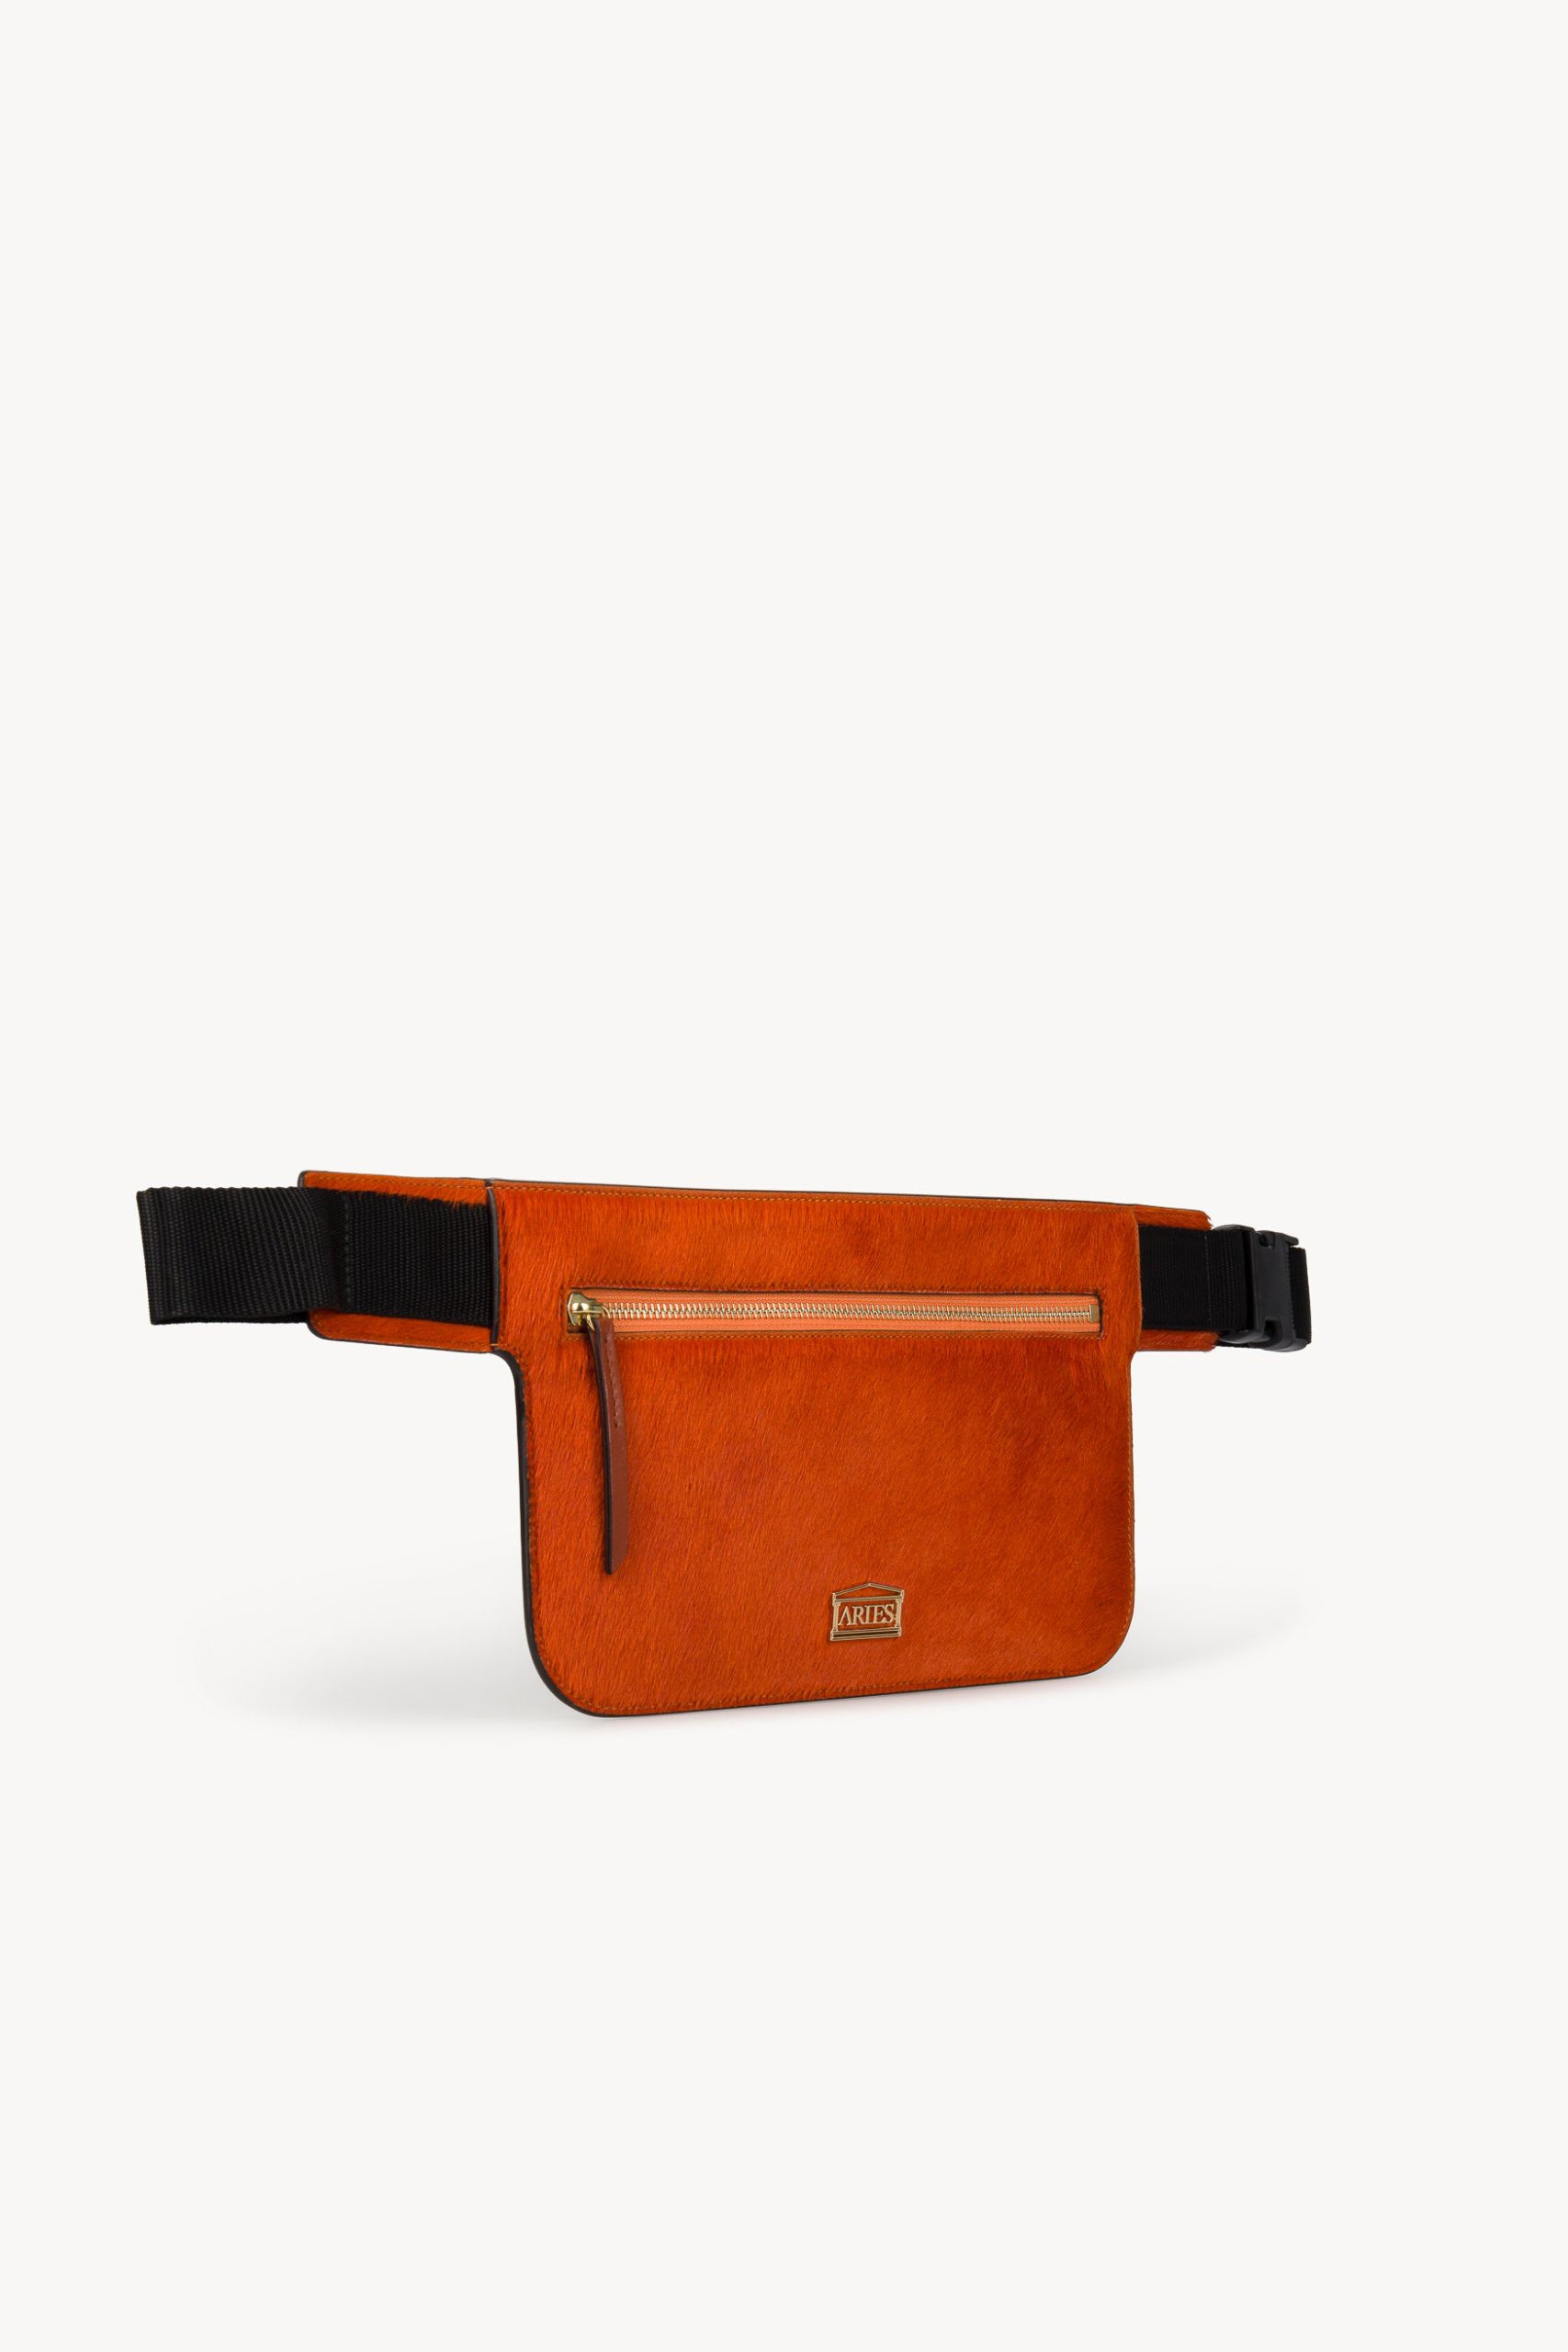 Jake Ponyskin Belt Bag Orange – Aries